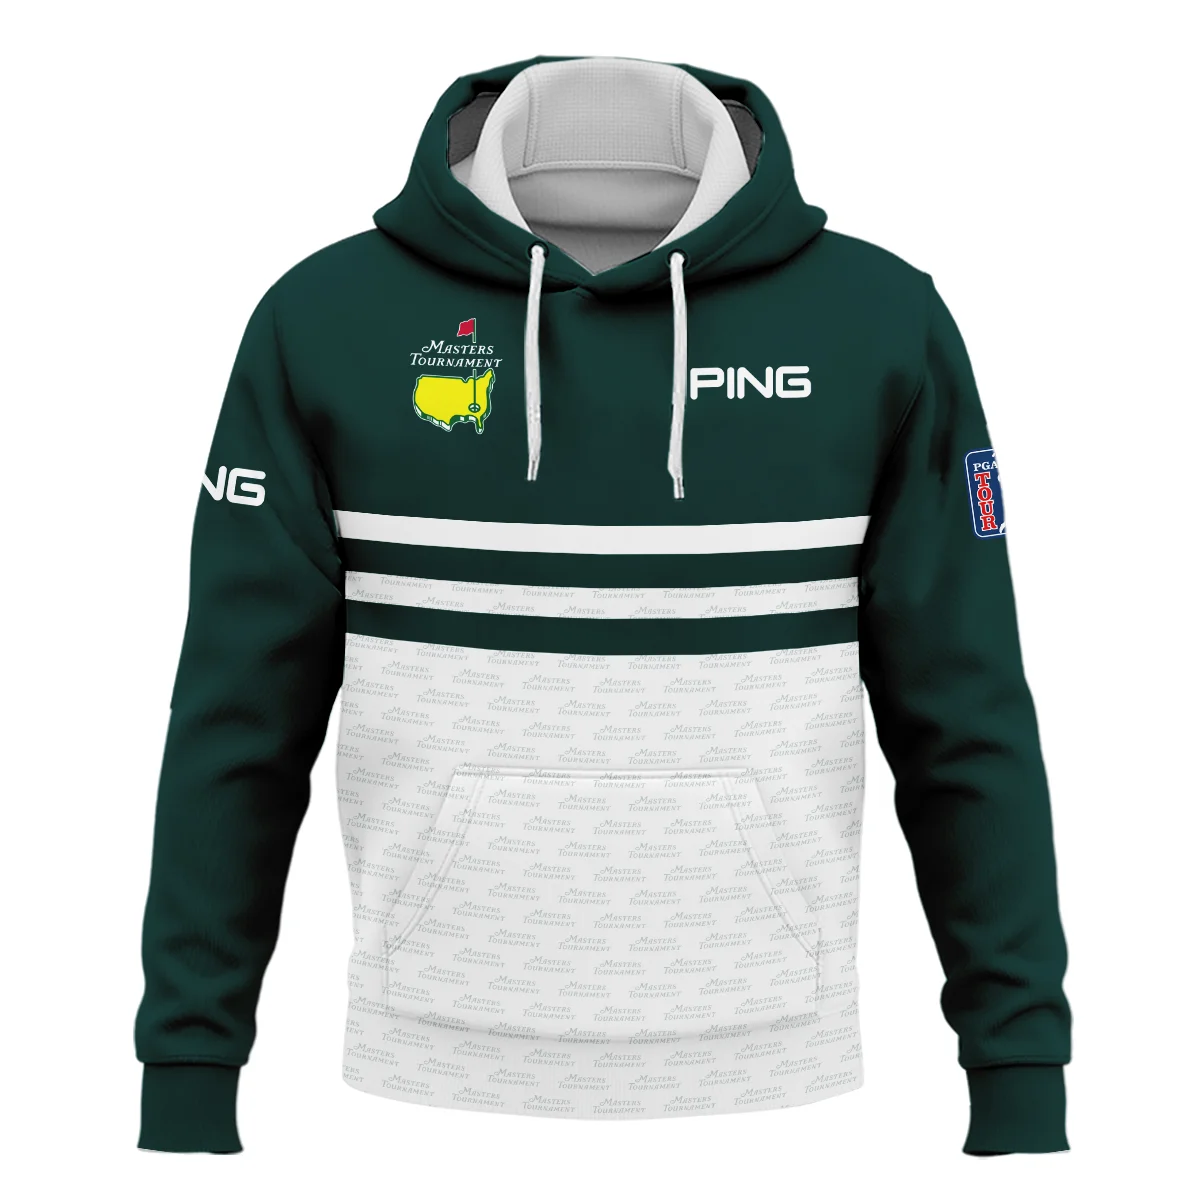 Dark Green Mix White With Logo Pattern Masters Tournament Ping Sleeveless Jacket Style Classic Sleeveless Jacket